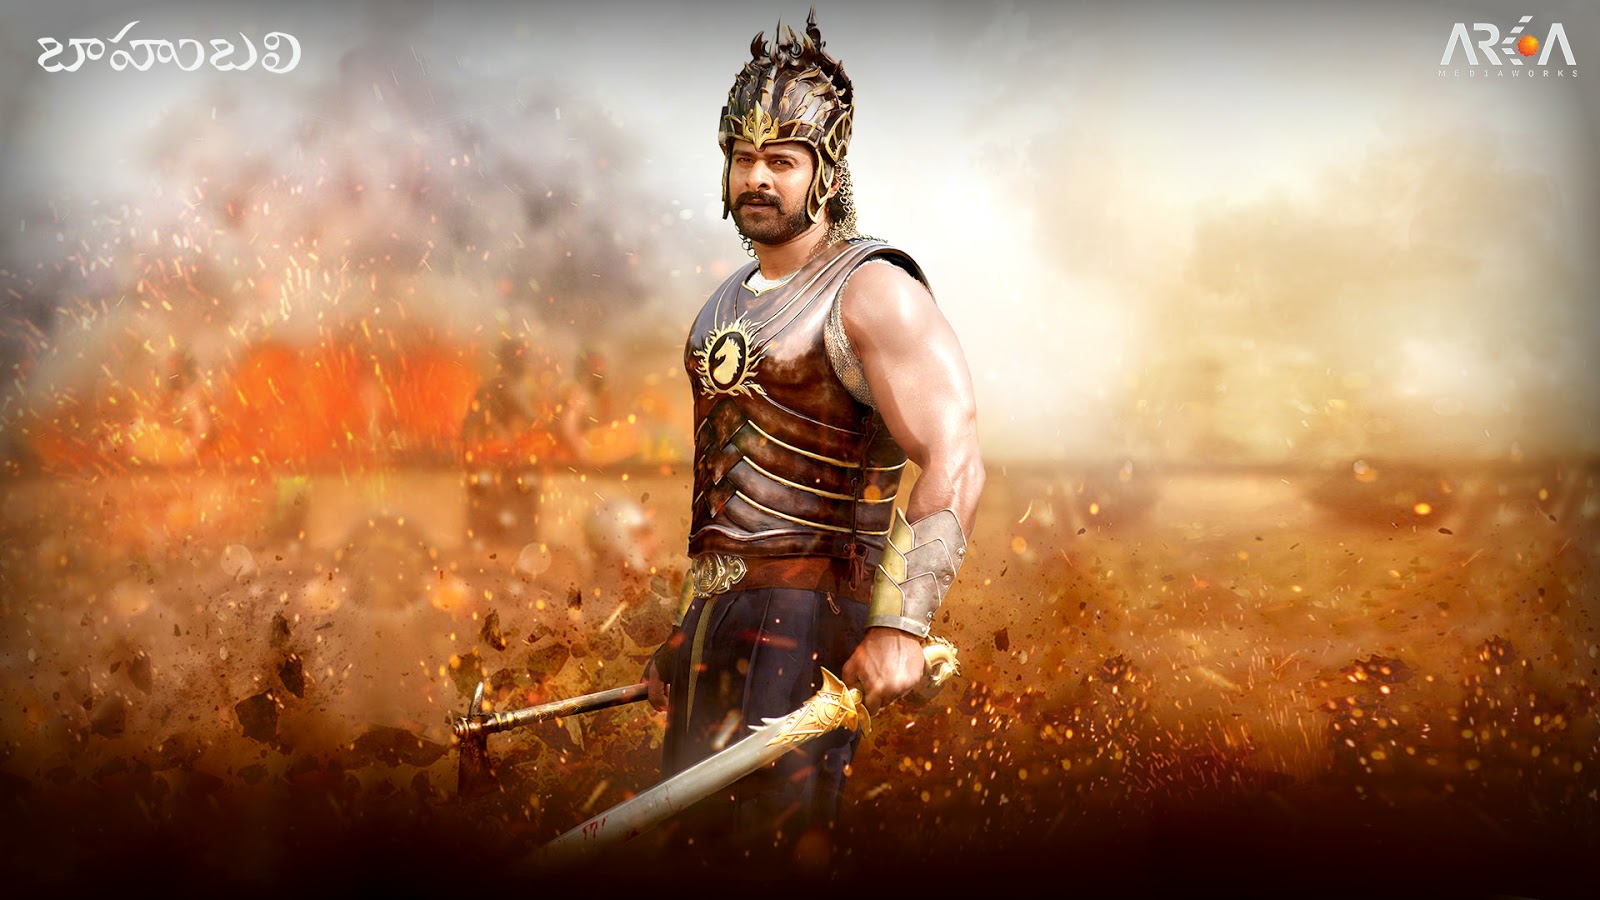 bahubali hd wallpaper,mythology,gladiator,wallpaper,games,graphic design